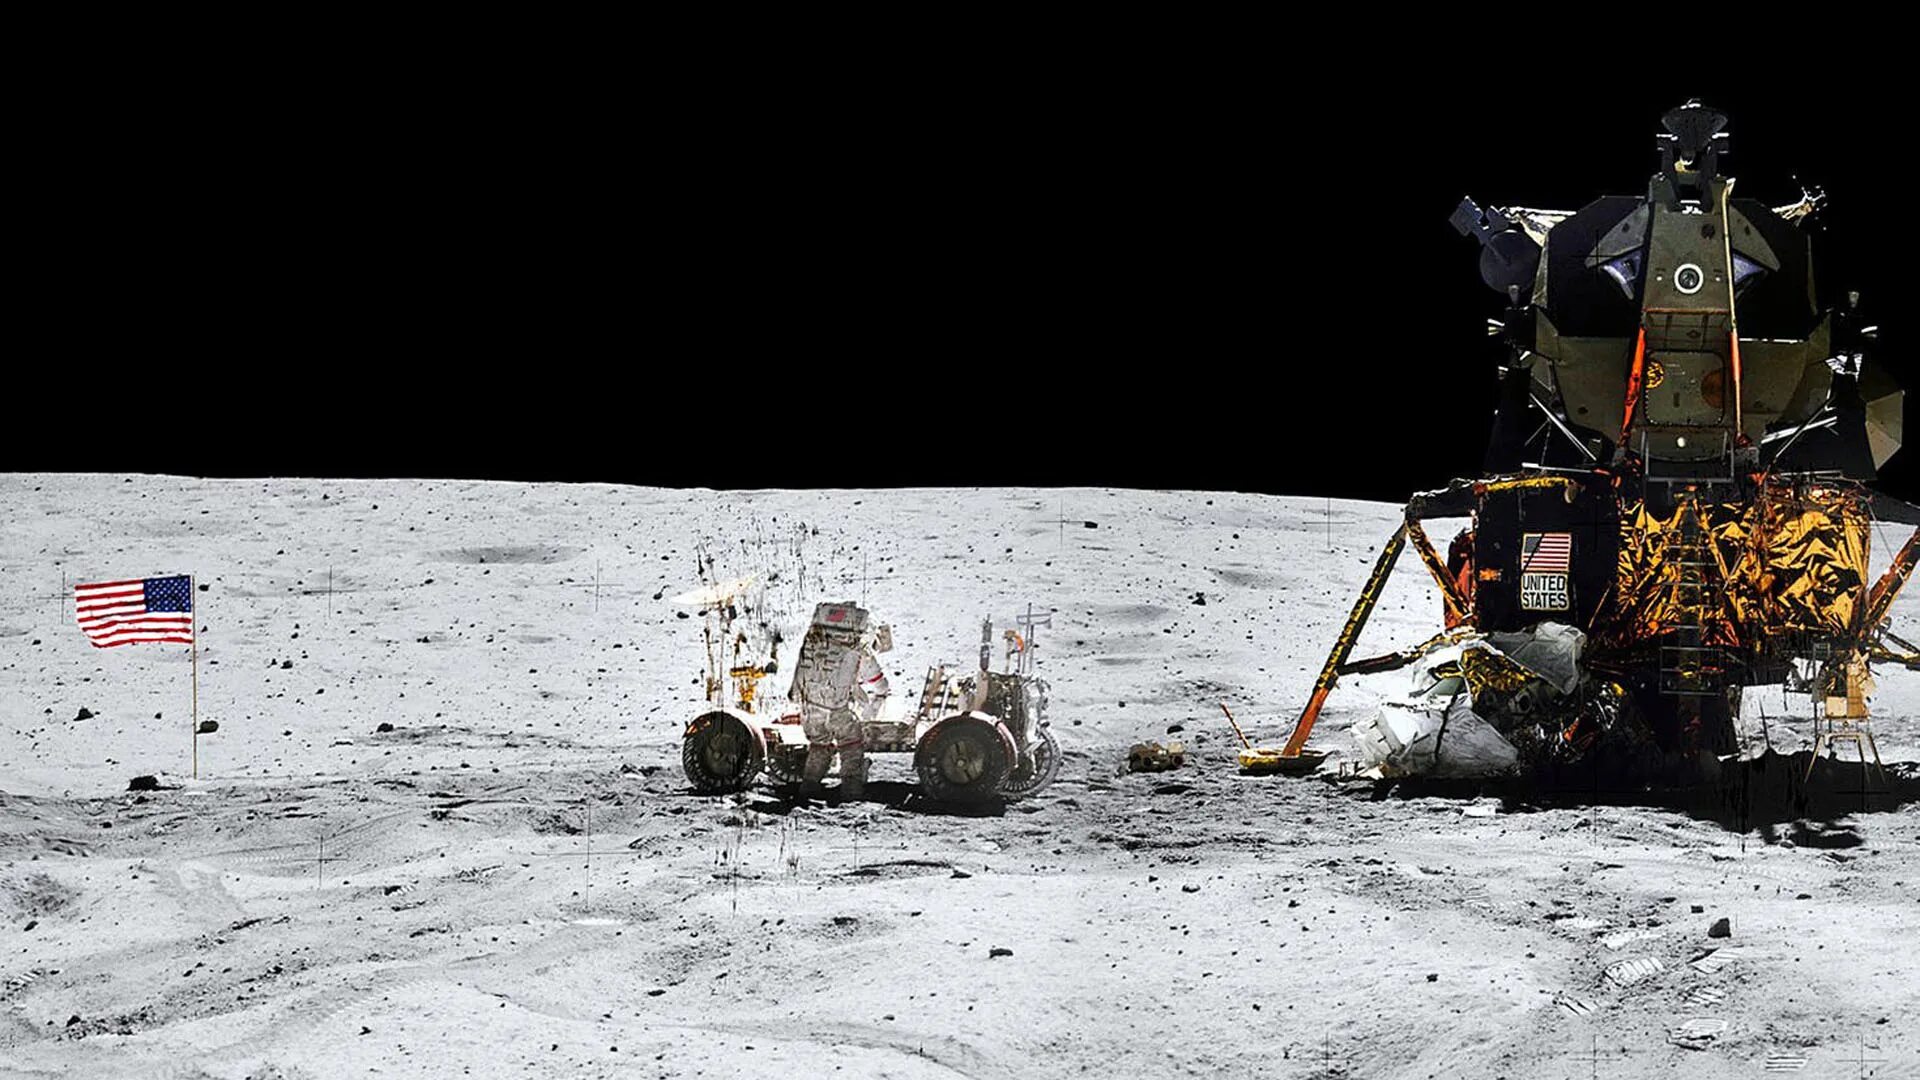 Какой аппарат совершил мягкую посадку на луну. Космический корабль Аполлон 11. Лунный модуль Аполлон 11. Спускаемый аппарат Аполлон 11. Лунный модуль корабля Аполлон 11 НАСА.